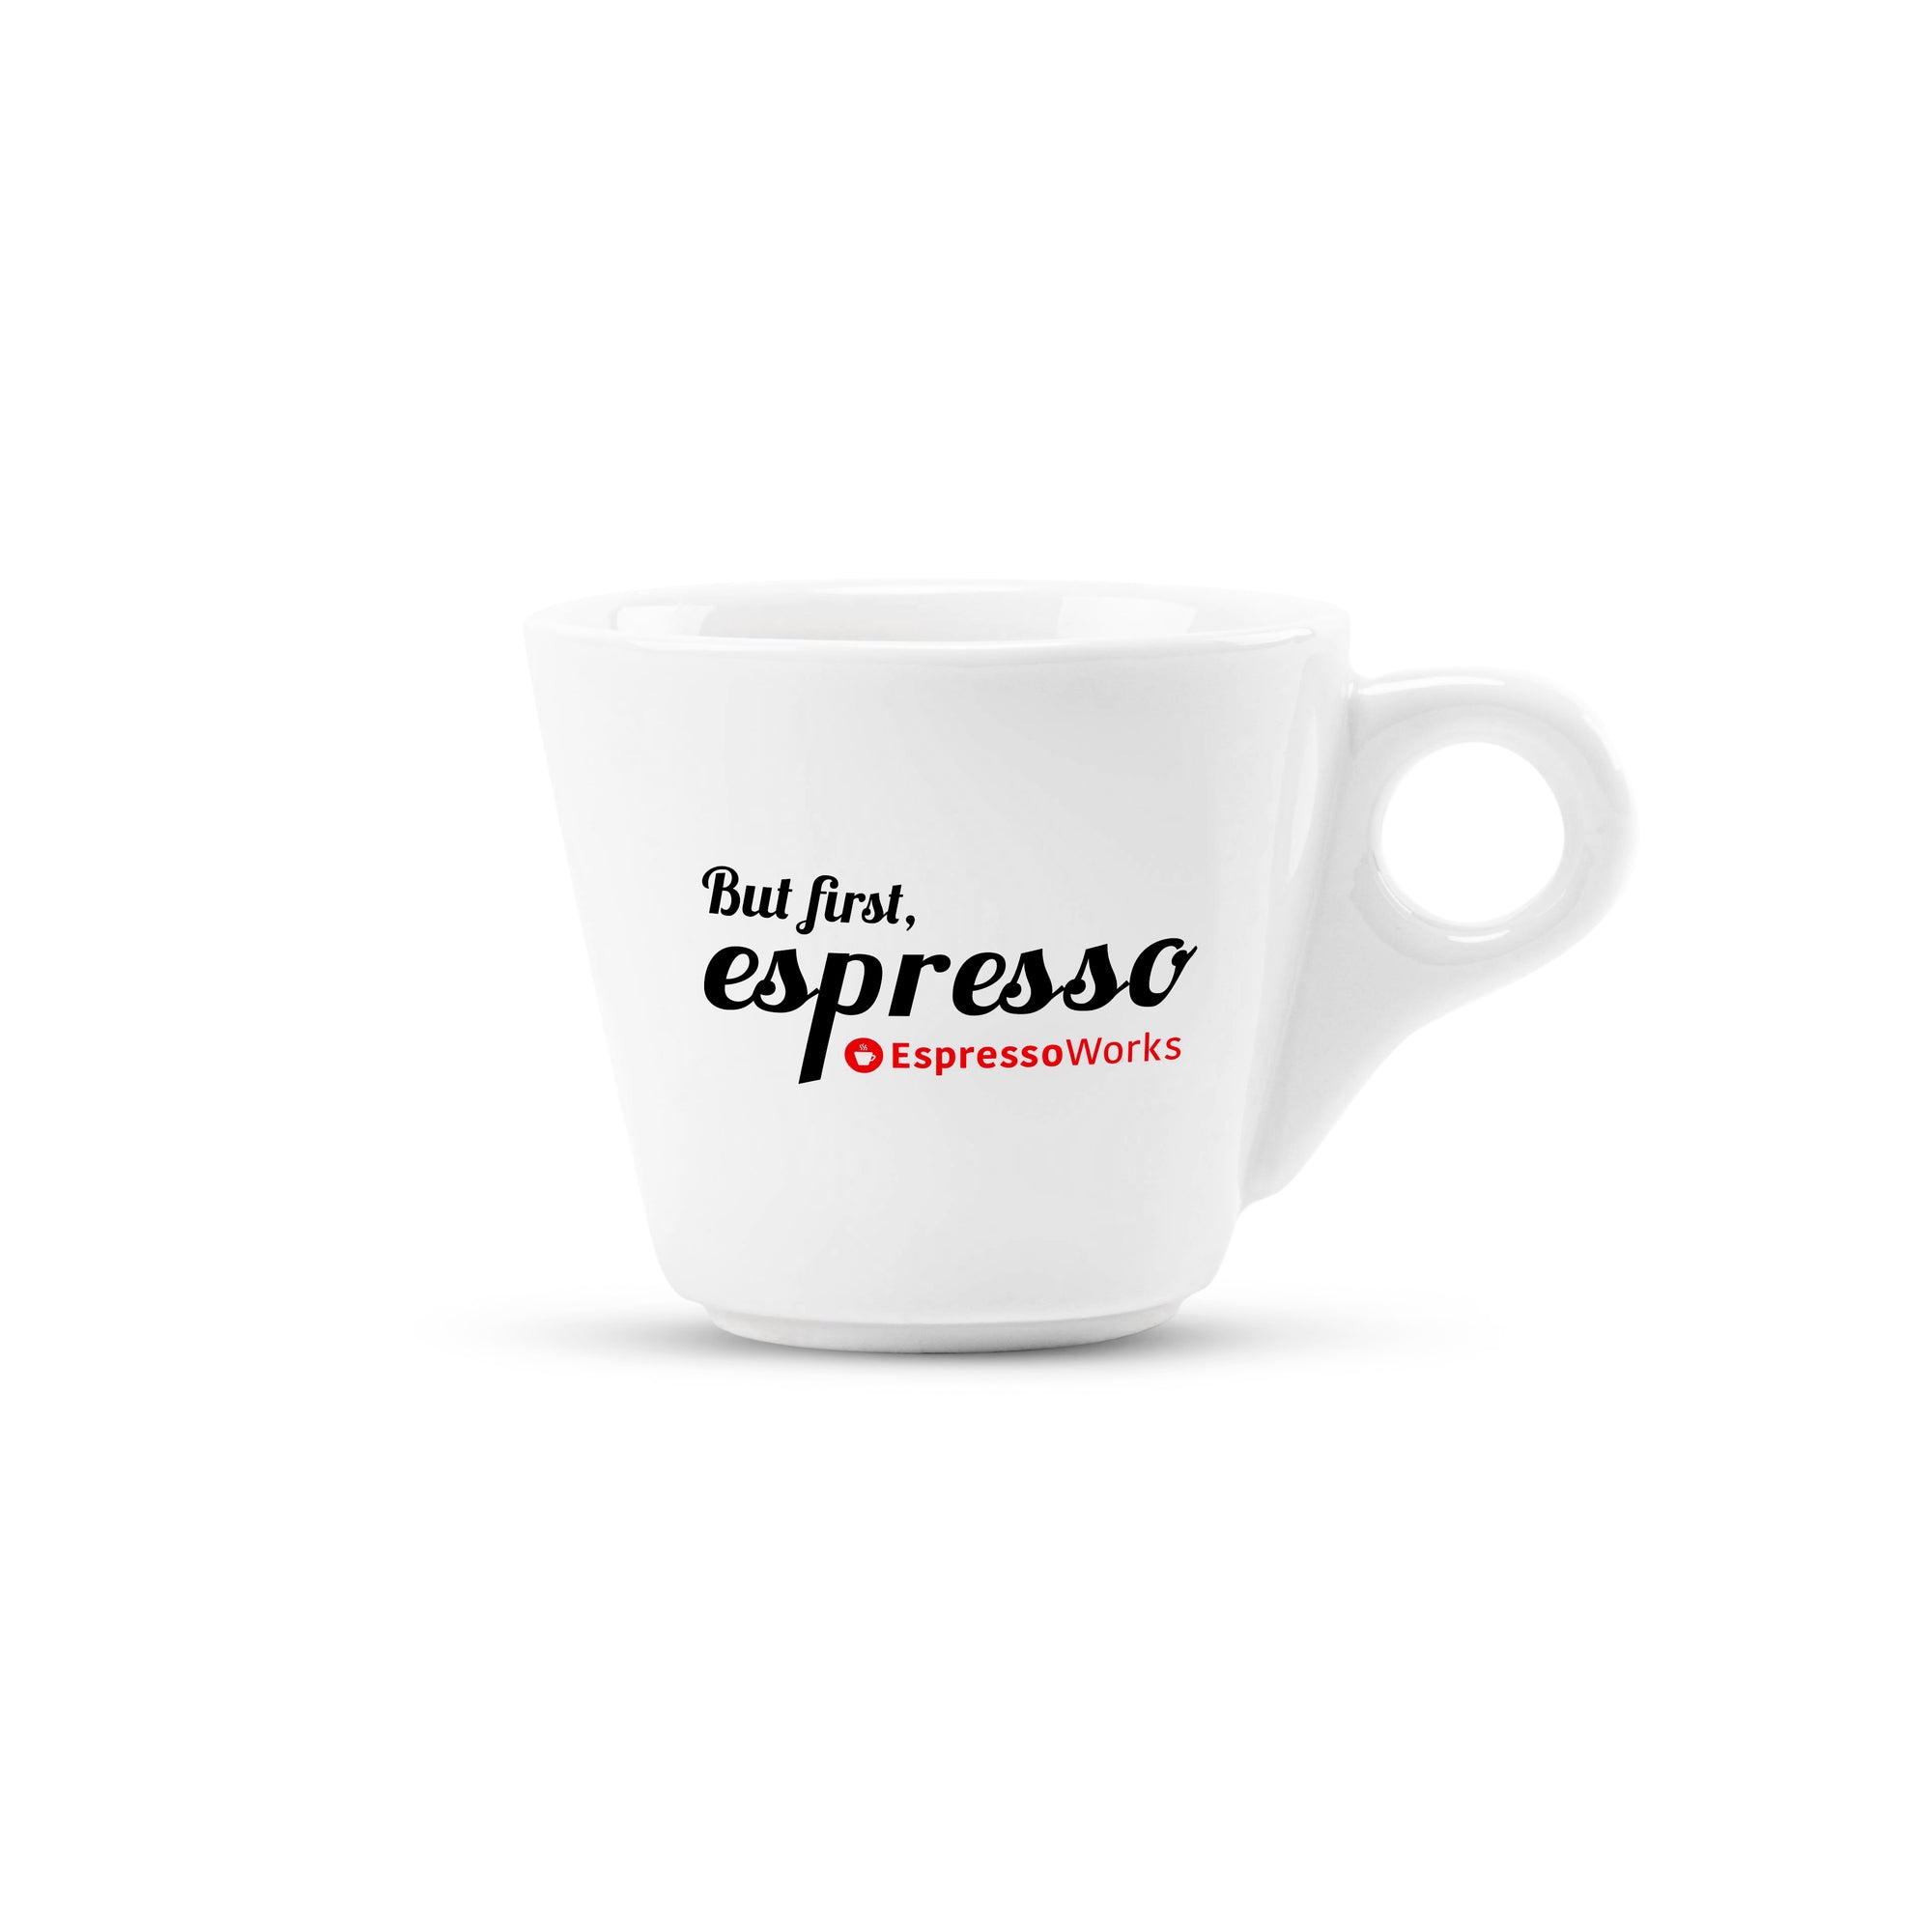 EspressoWorks Ceramic Espresso Cup with "But First, Espresso" Quote